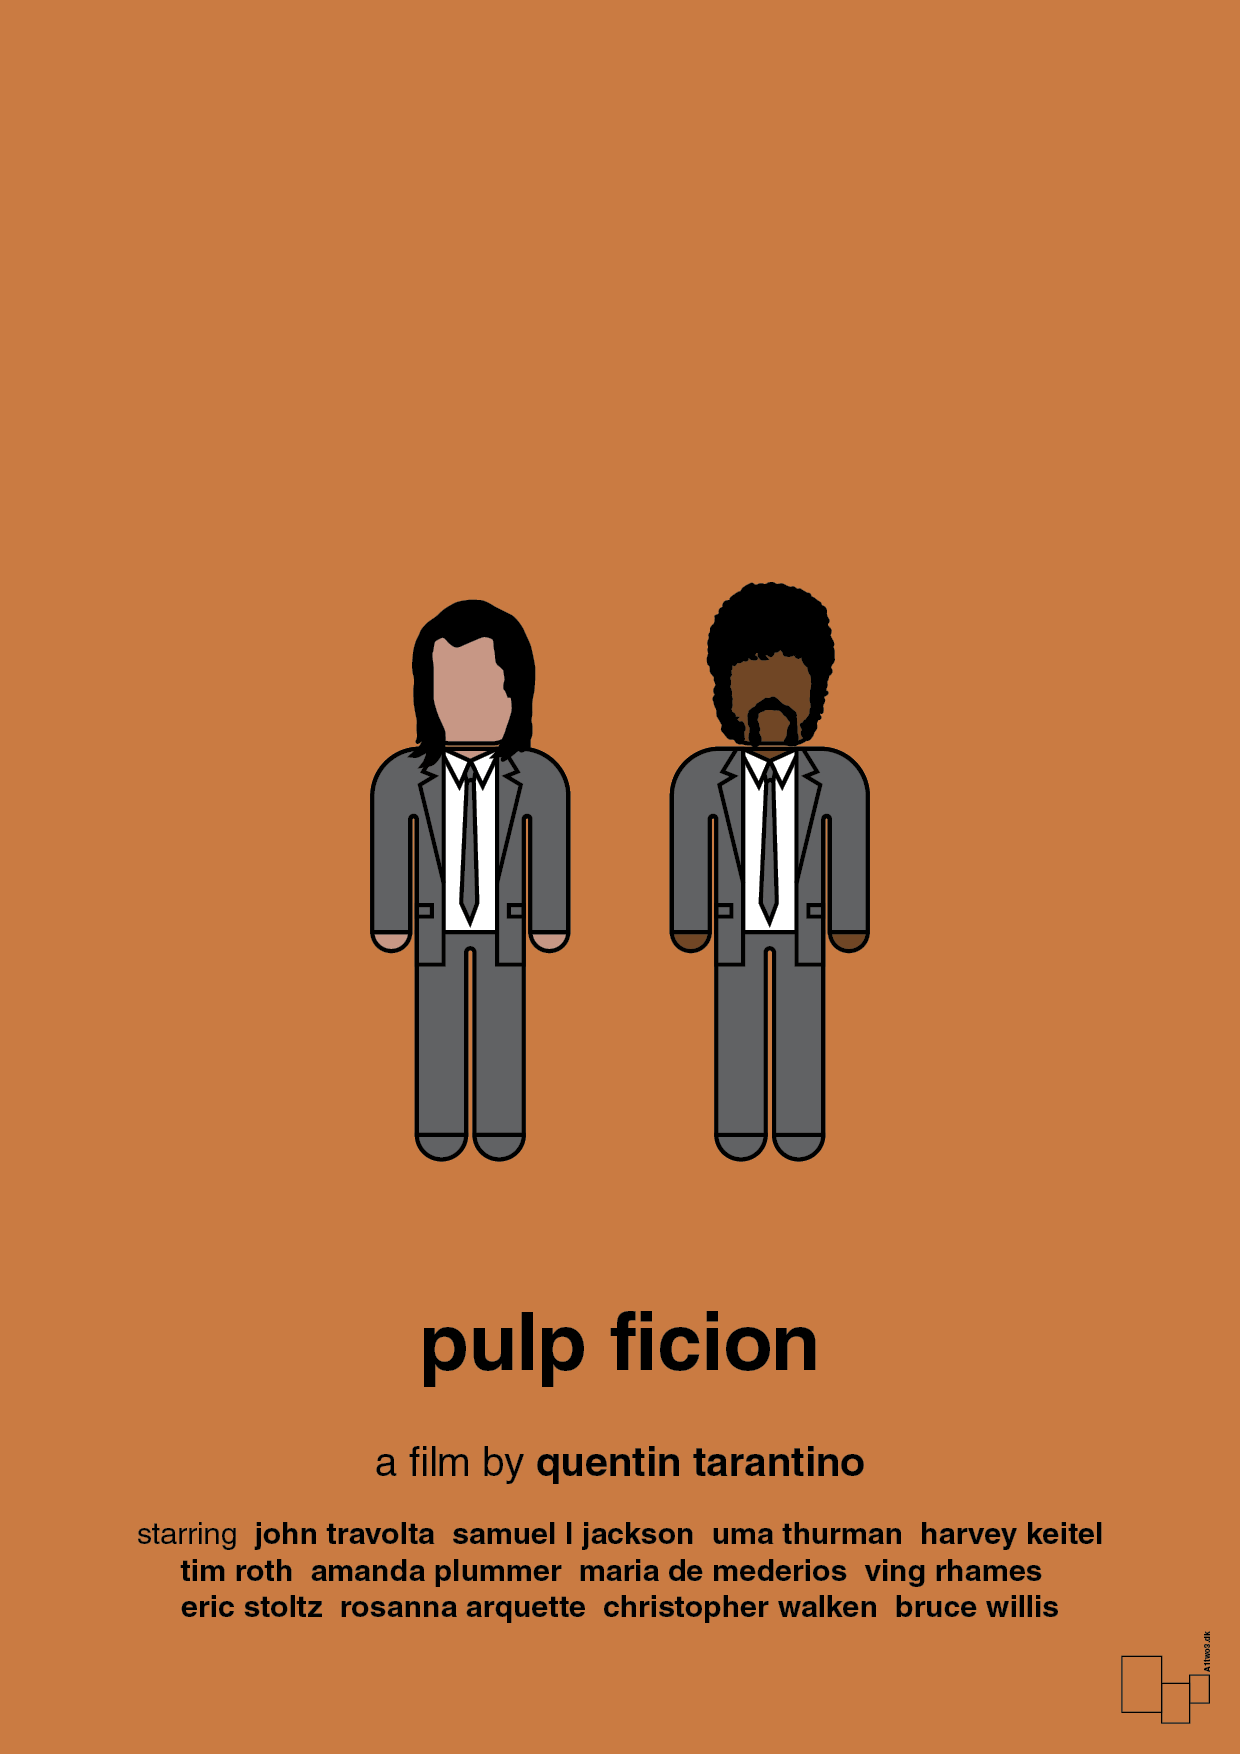 pulp fiction - Plakat med Film & TV i Rumba Orange